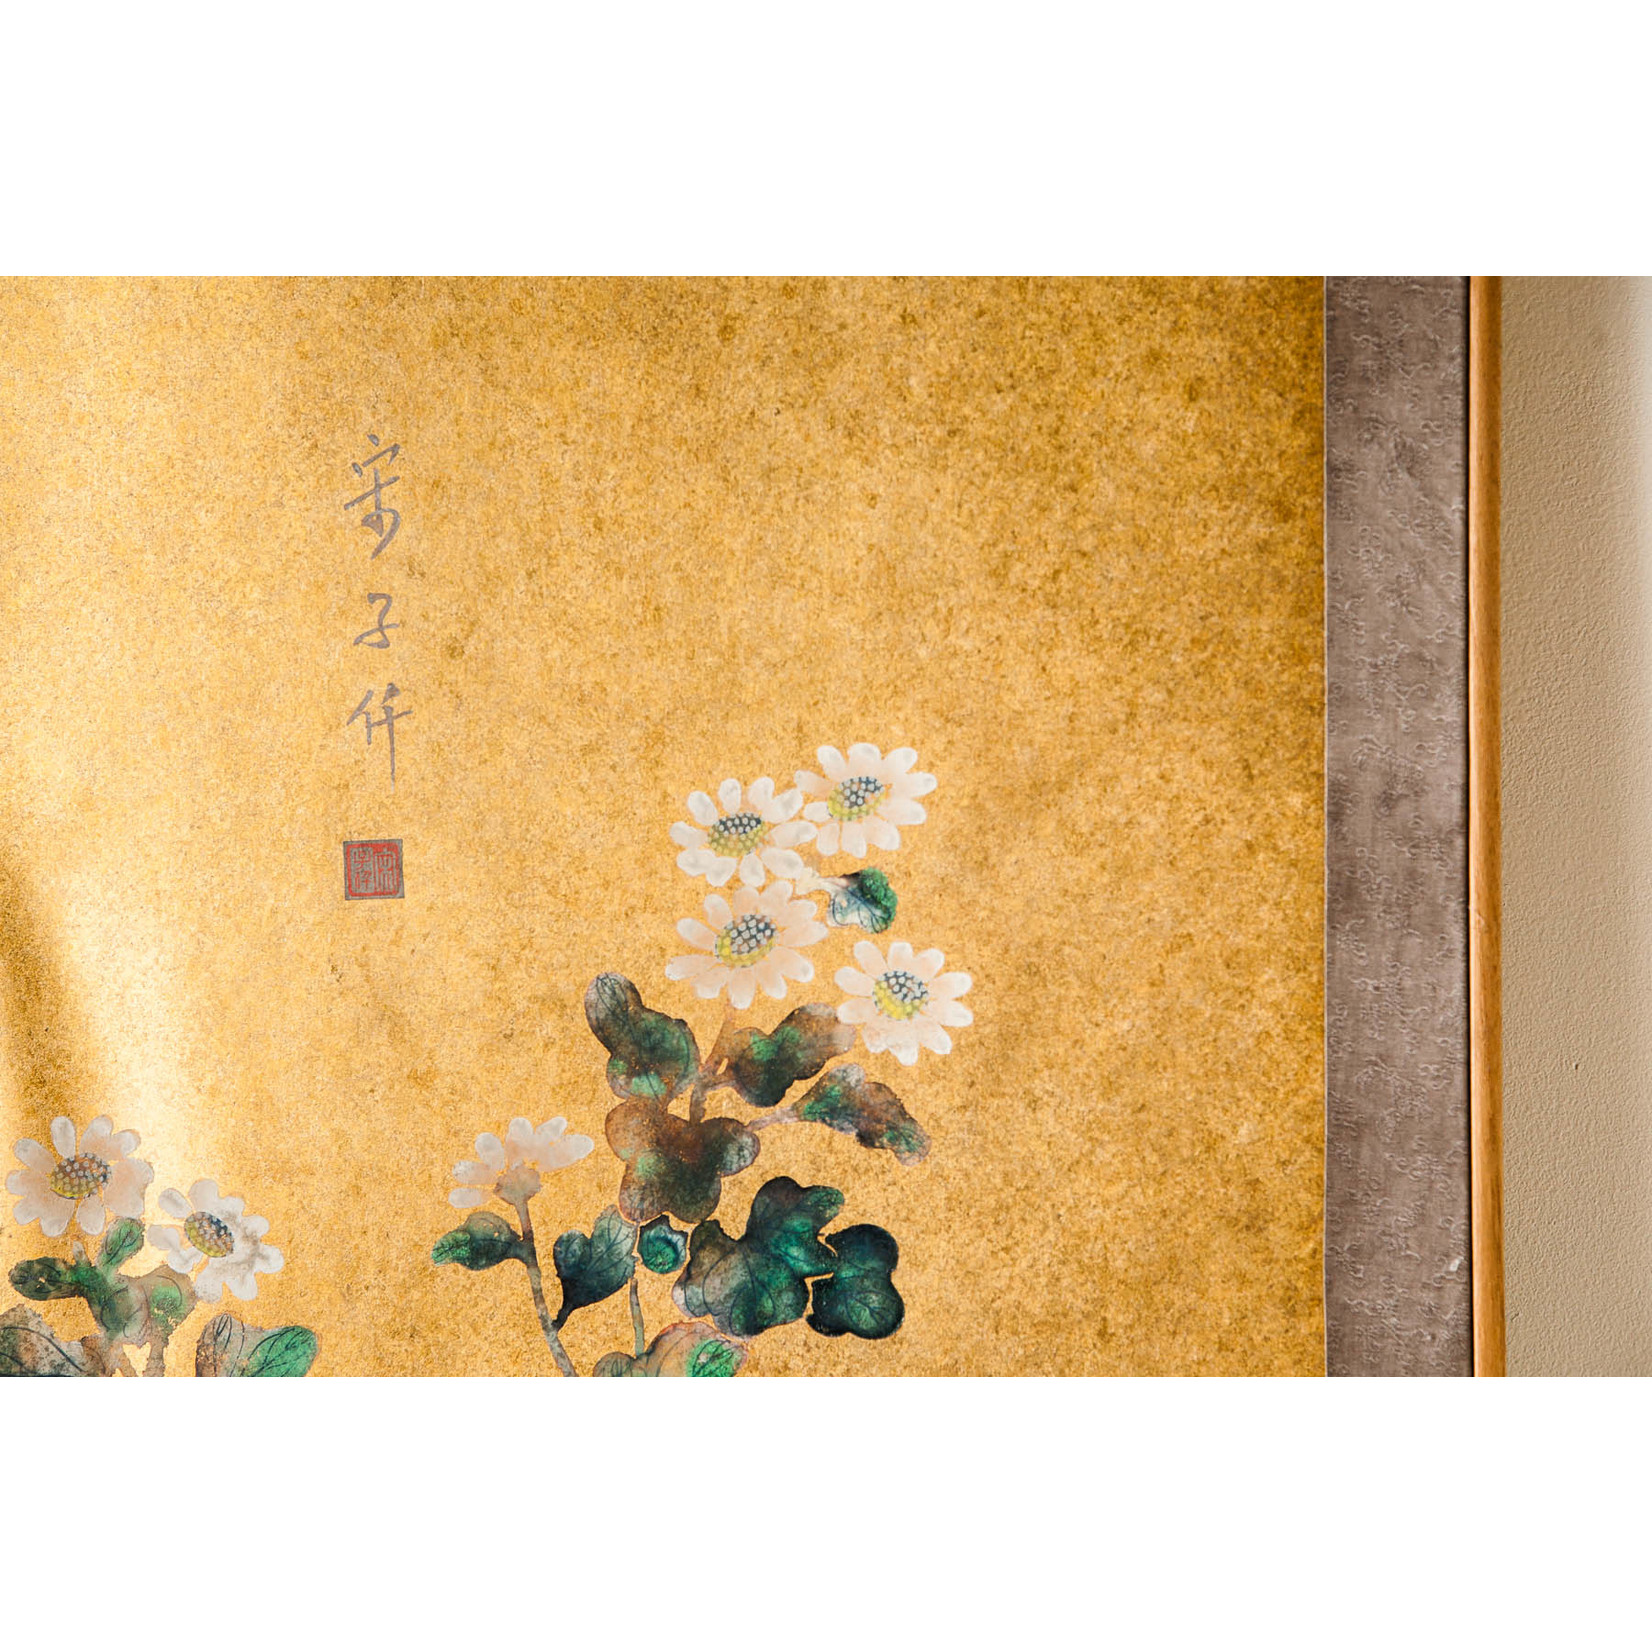 Lawrence & Scott " Twilight Garden" by Sung Tze-Chin on gold foil 4-Panel Screen